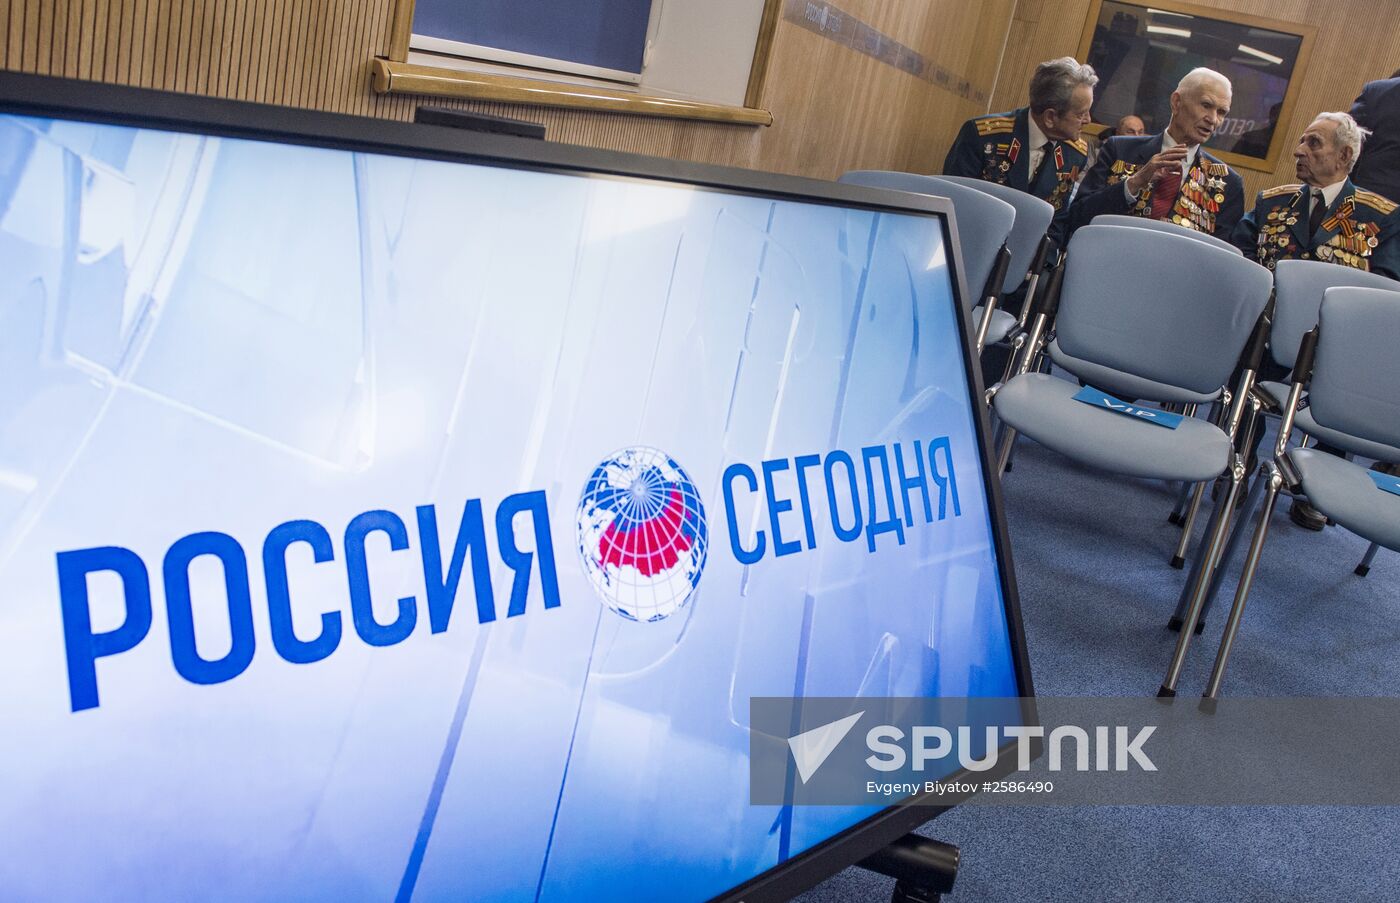 Opening of Rossiya Segodnya's Press Center in Simferopol